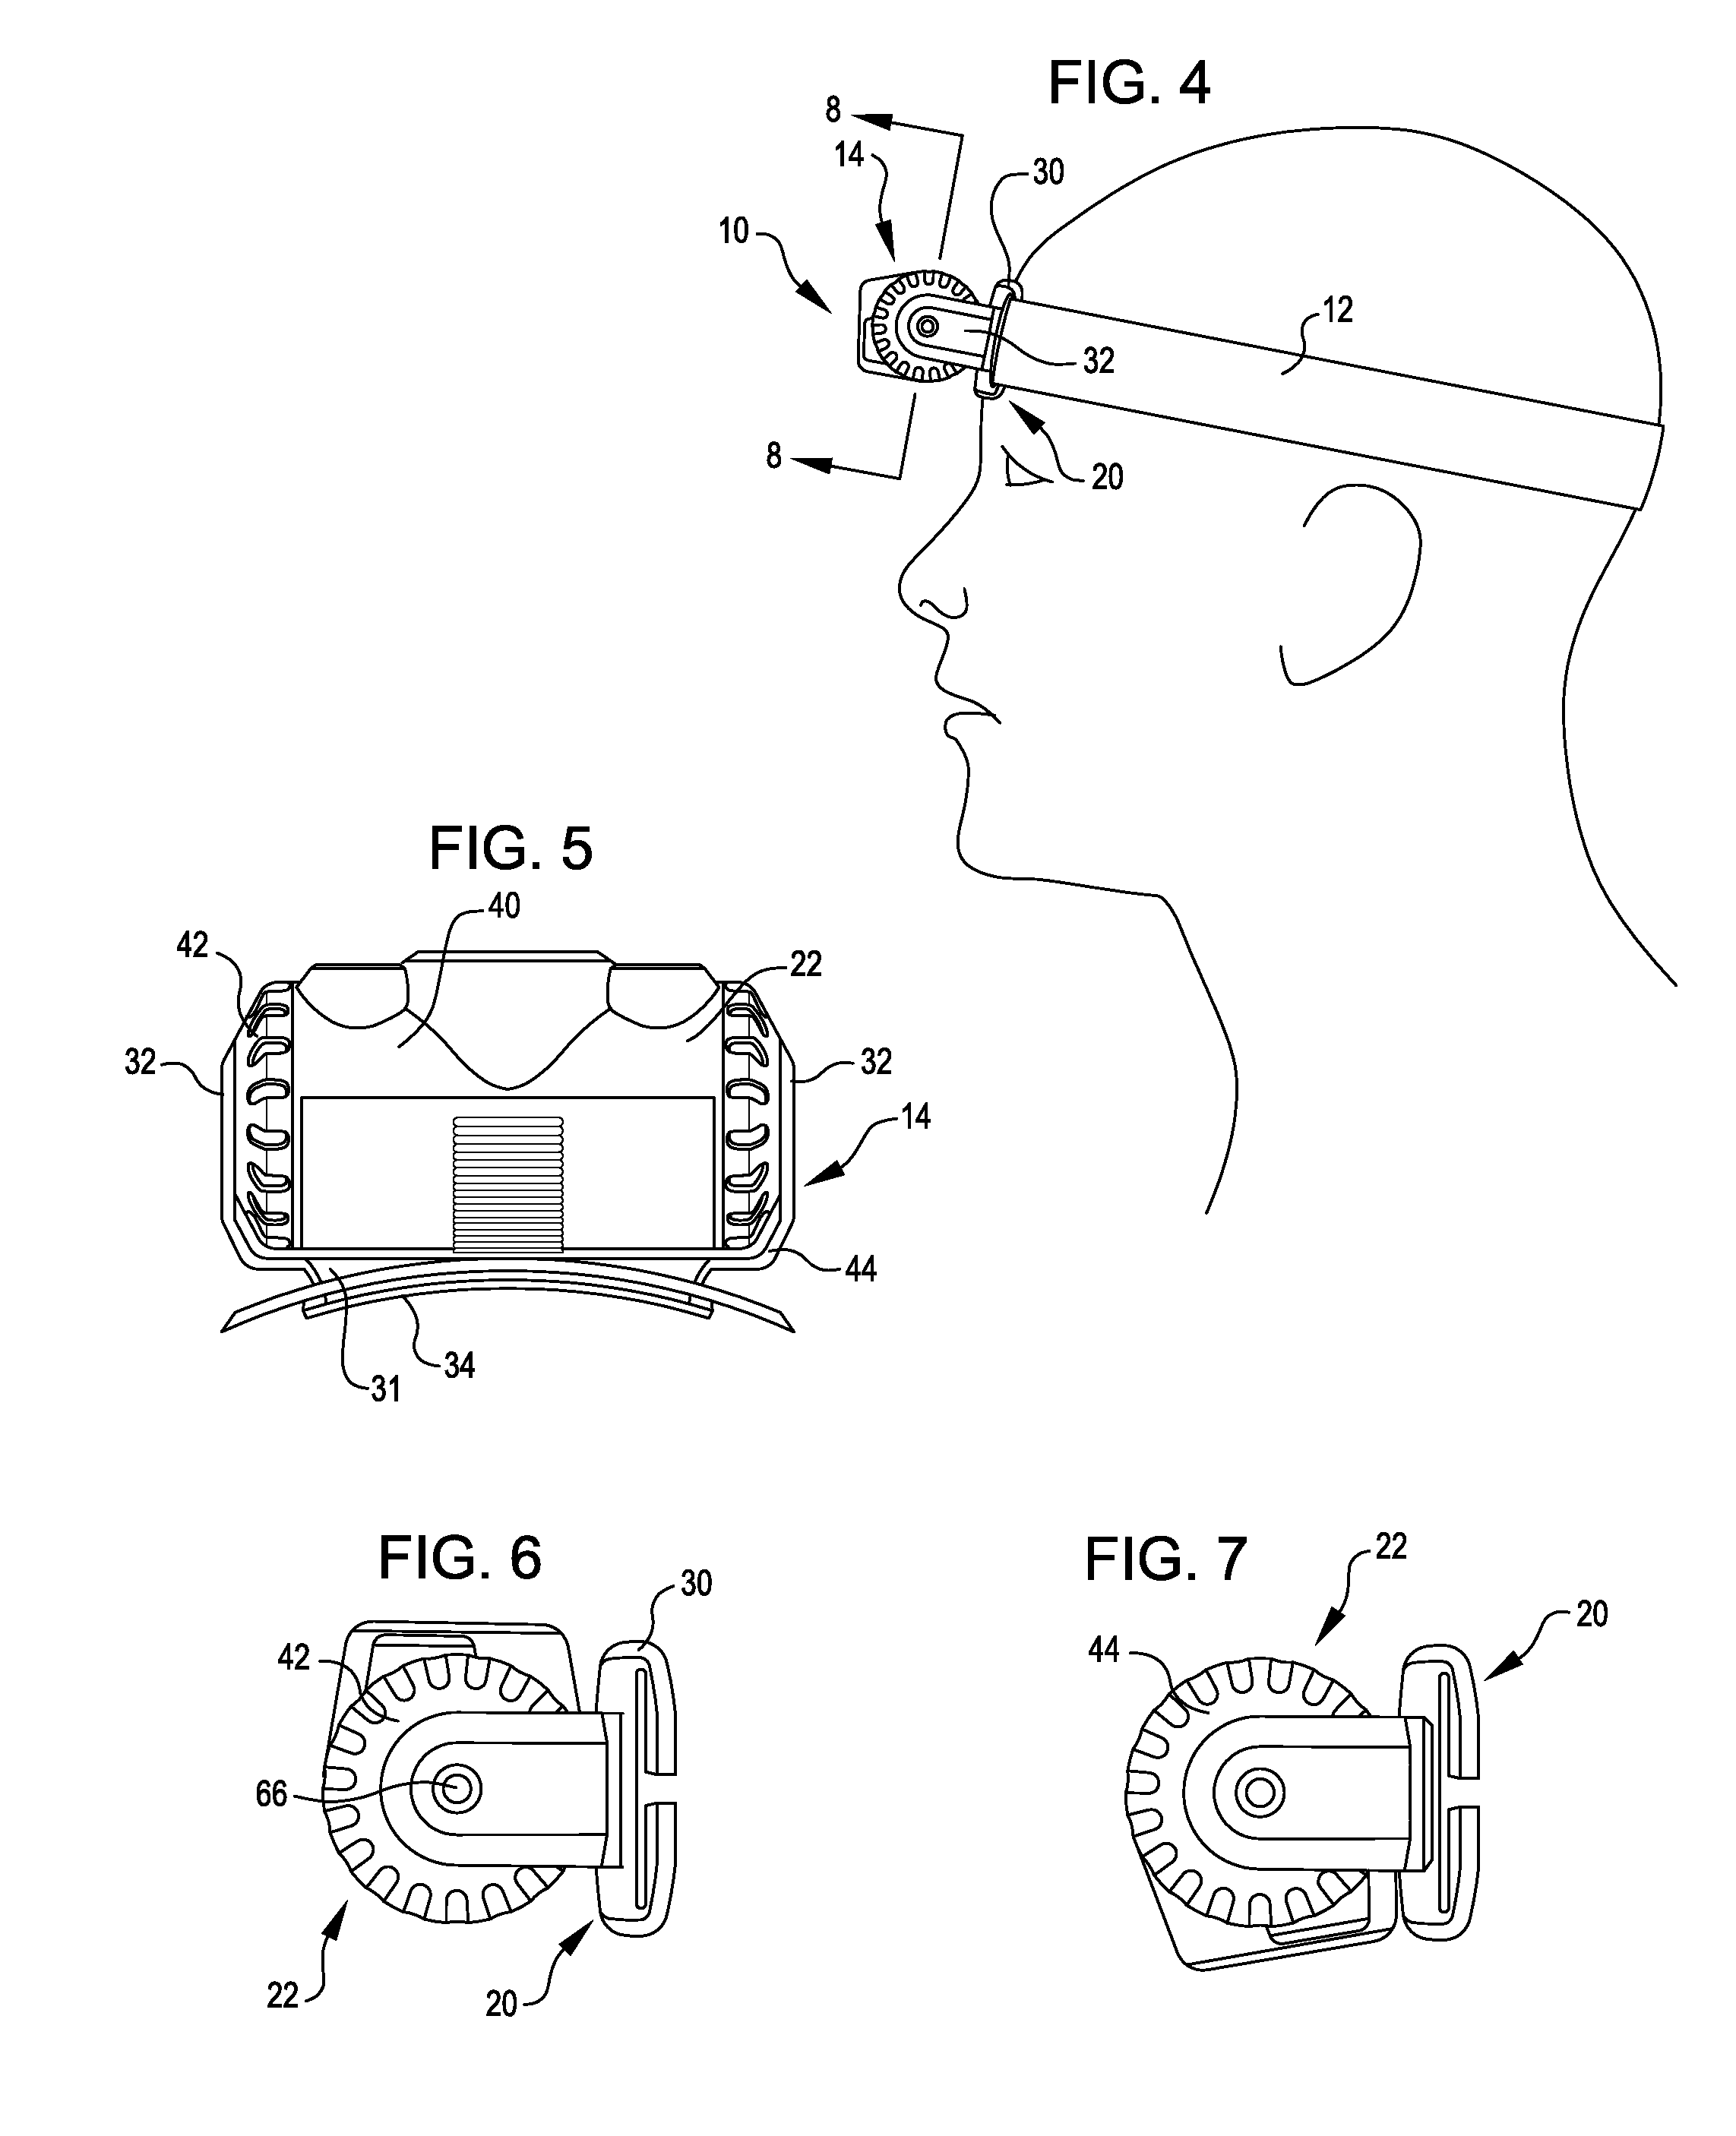 Single axis headlamp